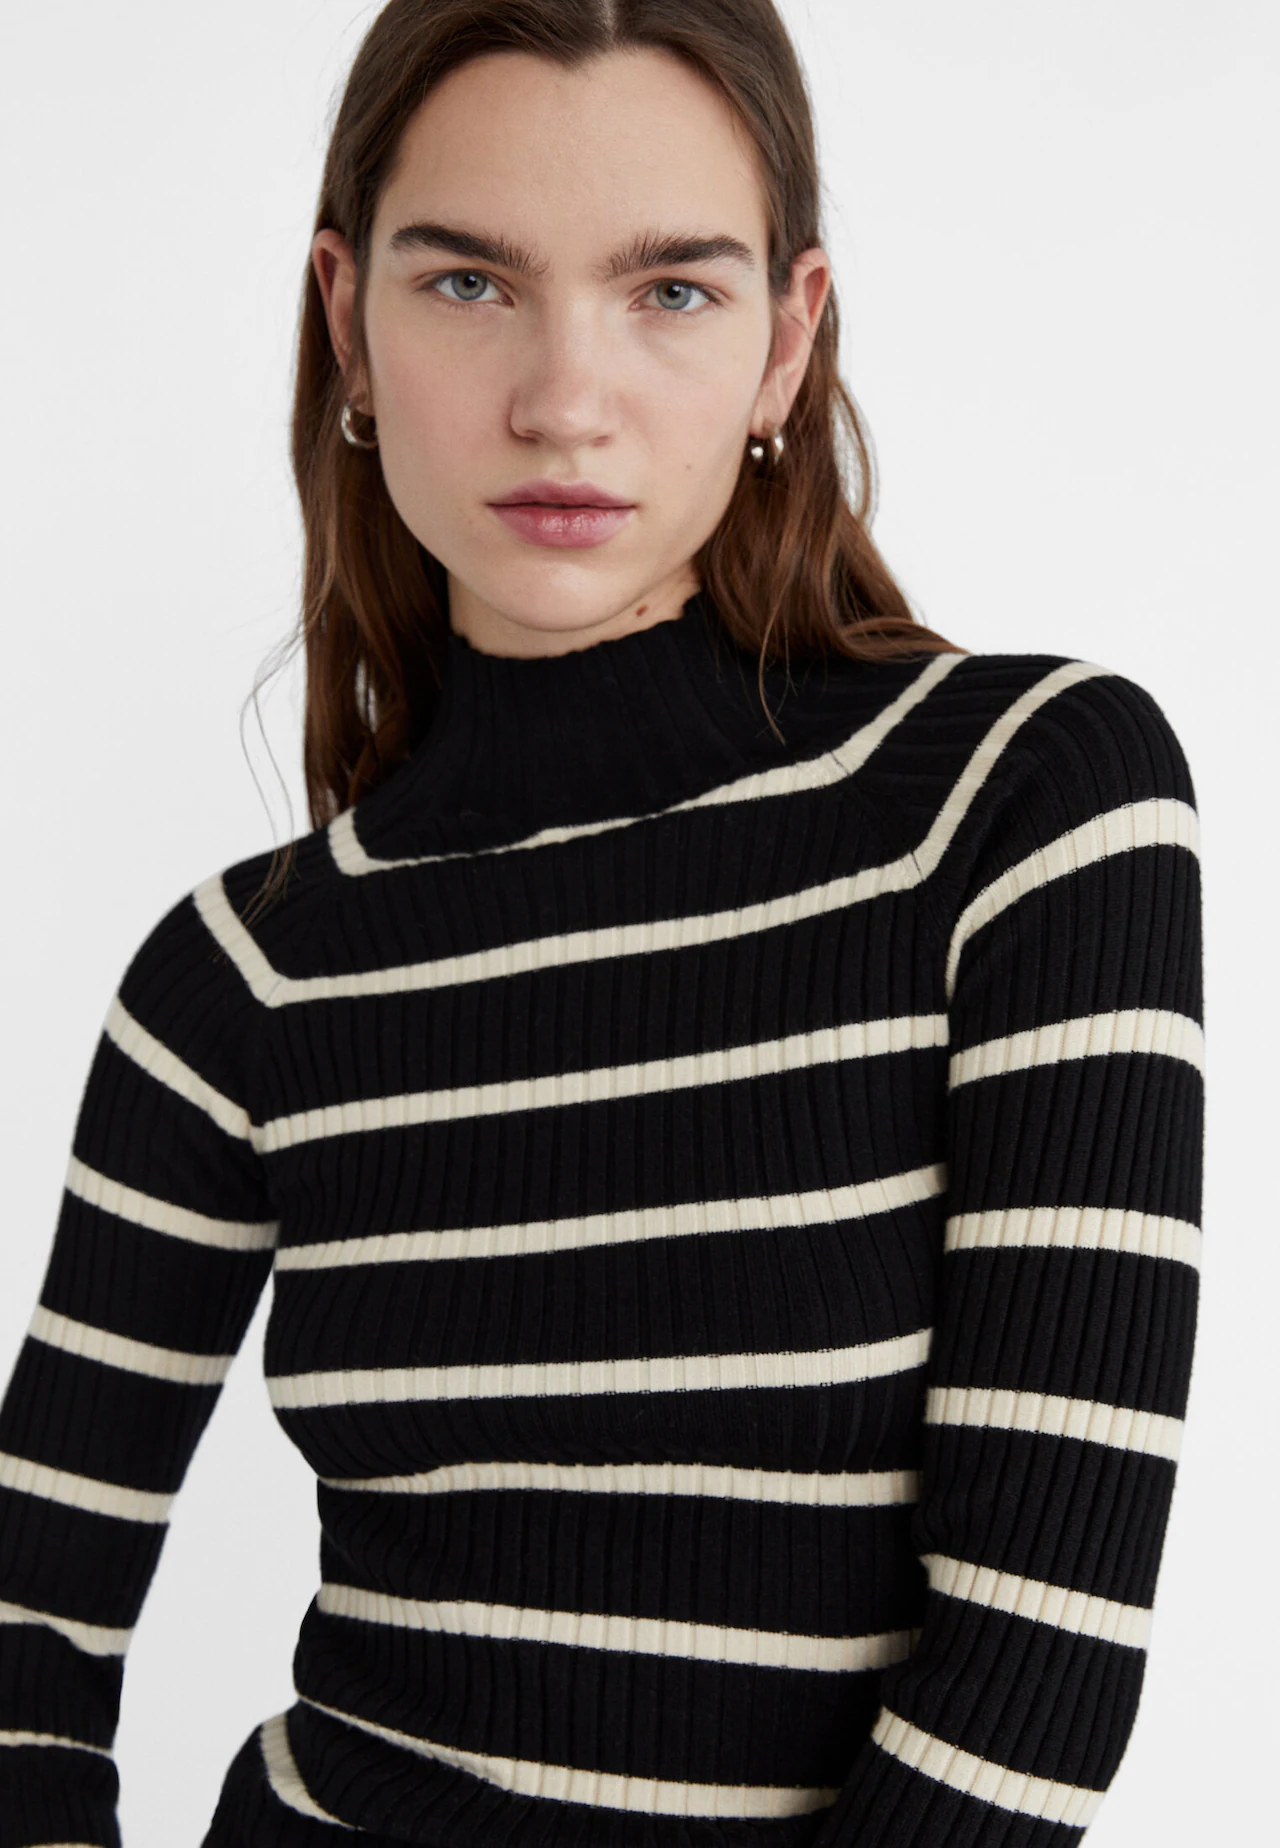 Ribbed striped mock turtleneck knit jumper - Women's fashion